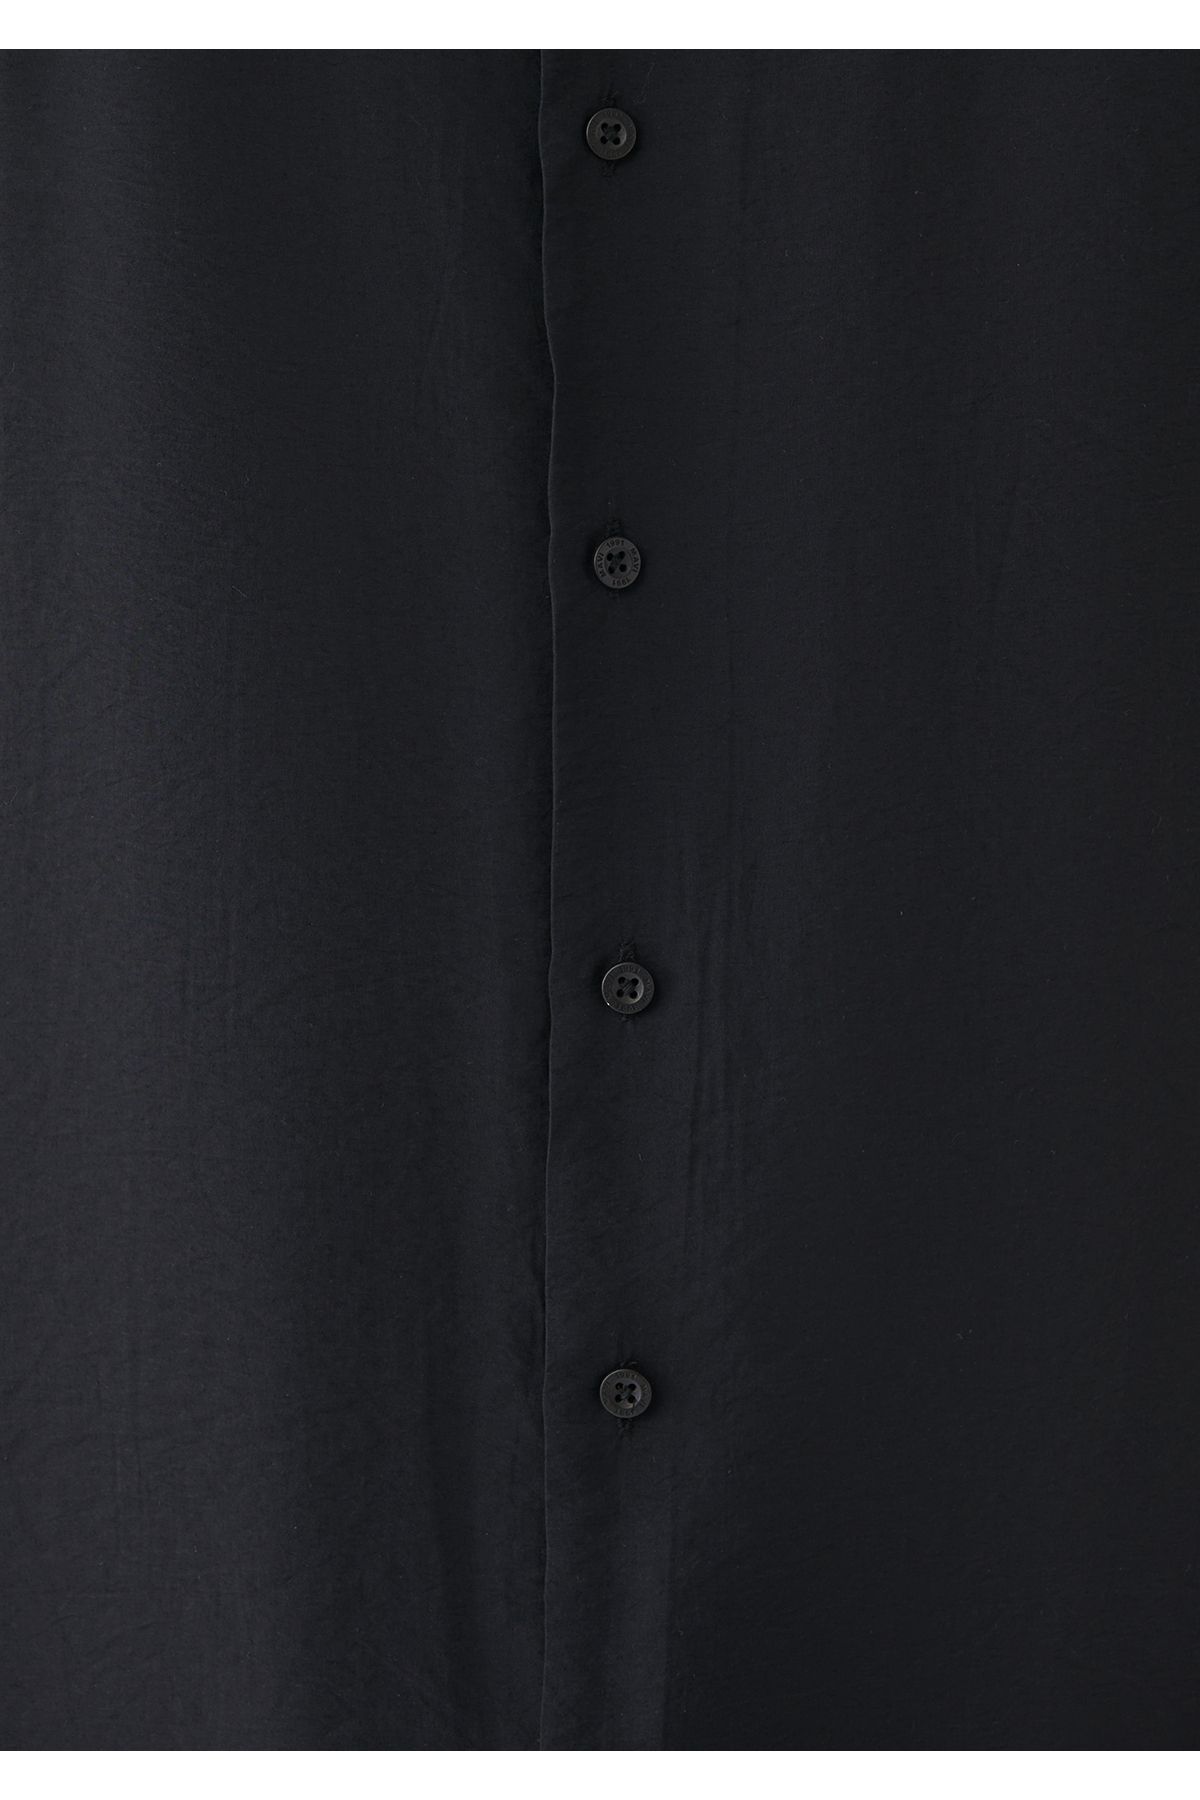 Mavi پیراهن سیاه آستین کوتاه مناسب / برش معمولی 0210315-900